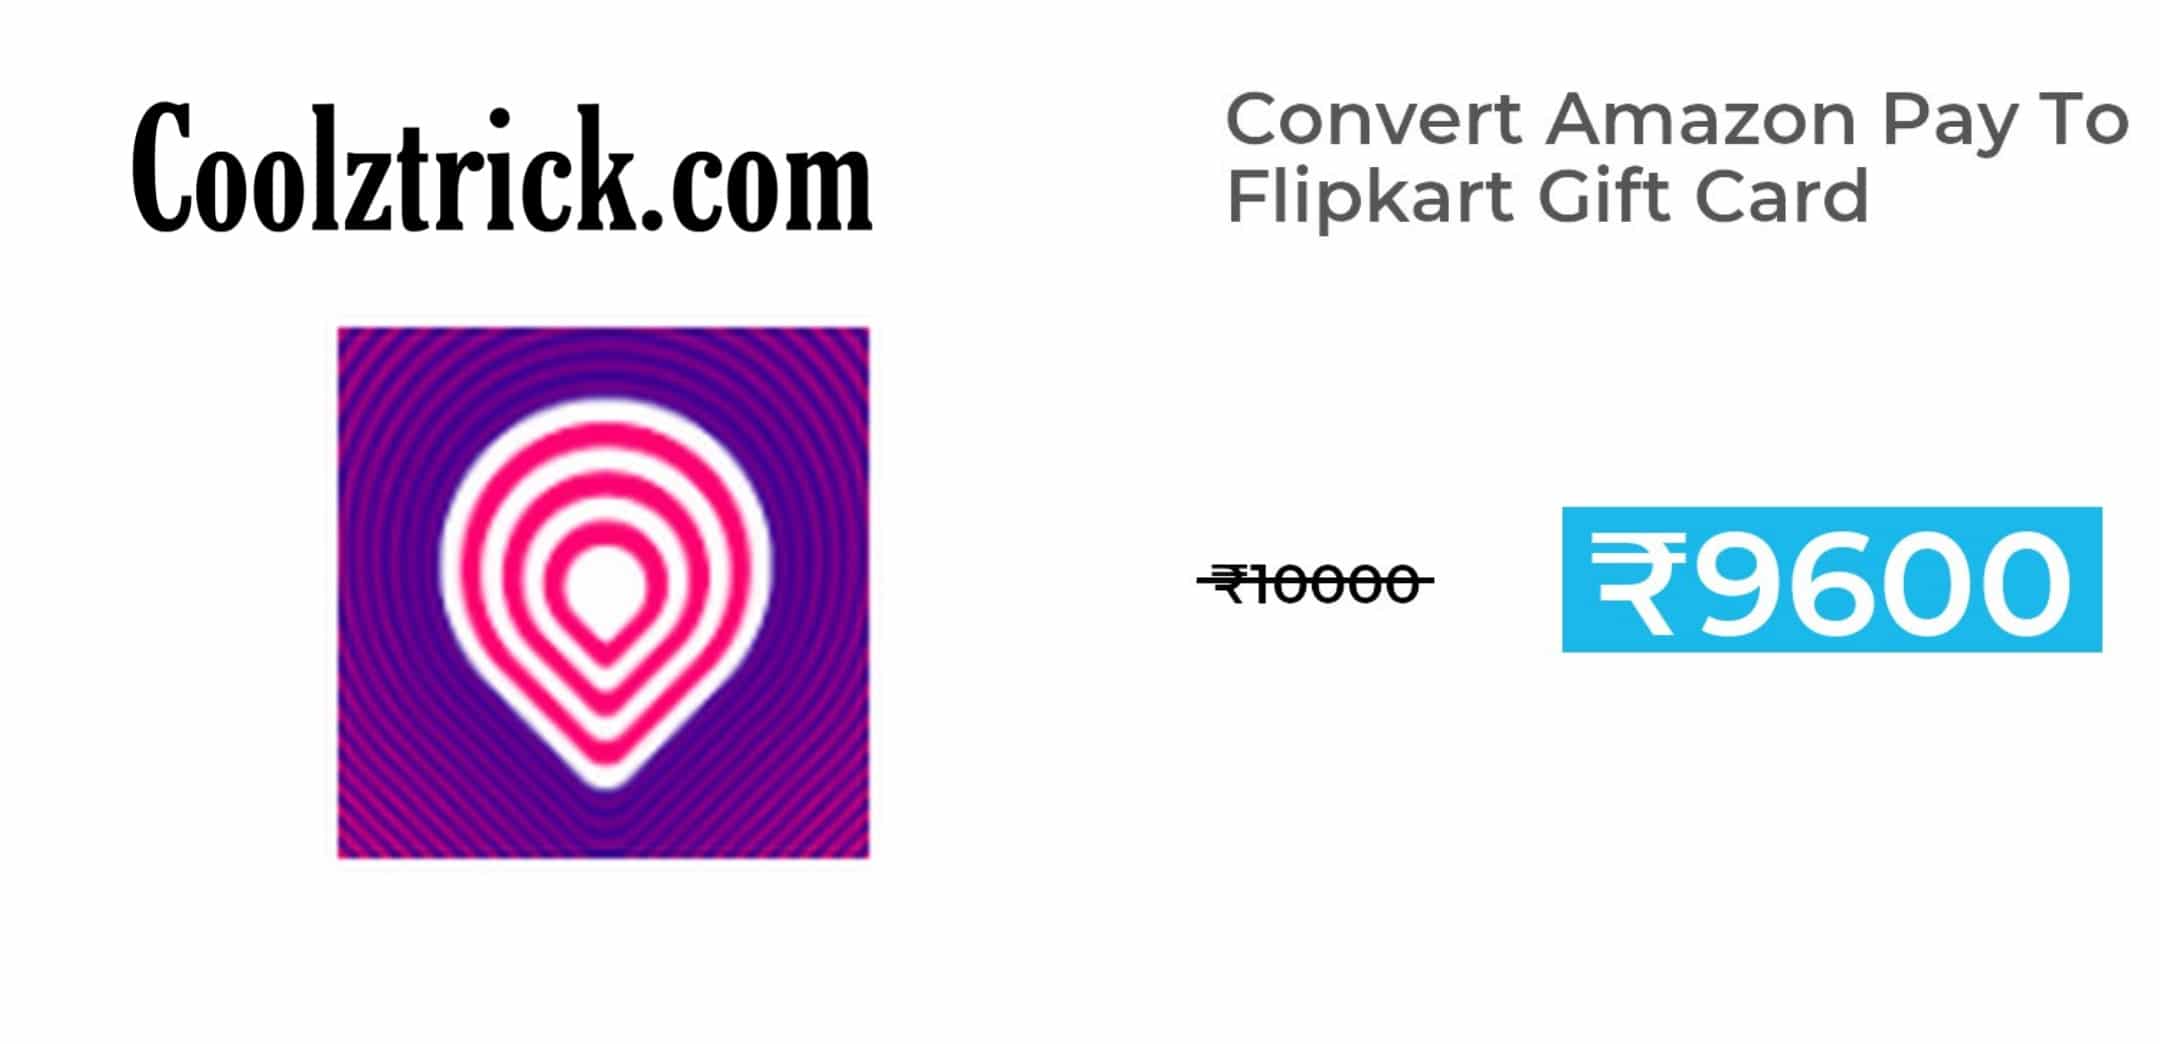 Convert Amazon Pay To Flipkart Gift Card